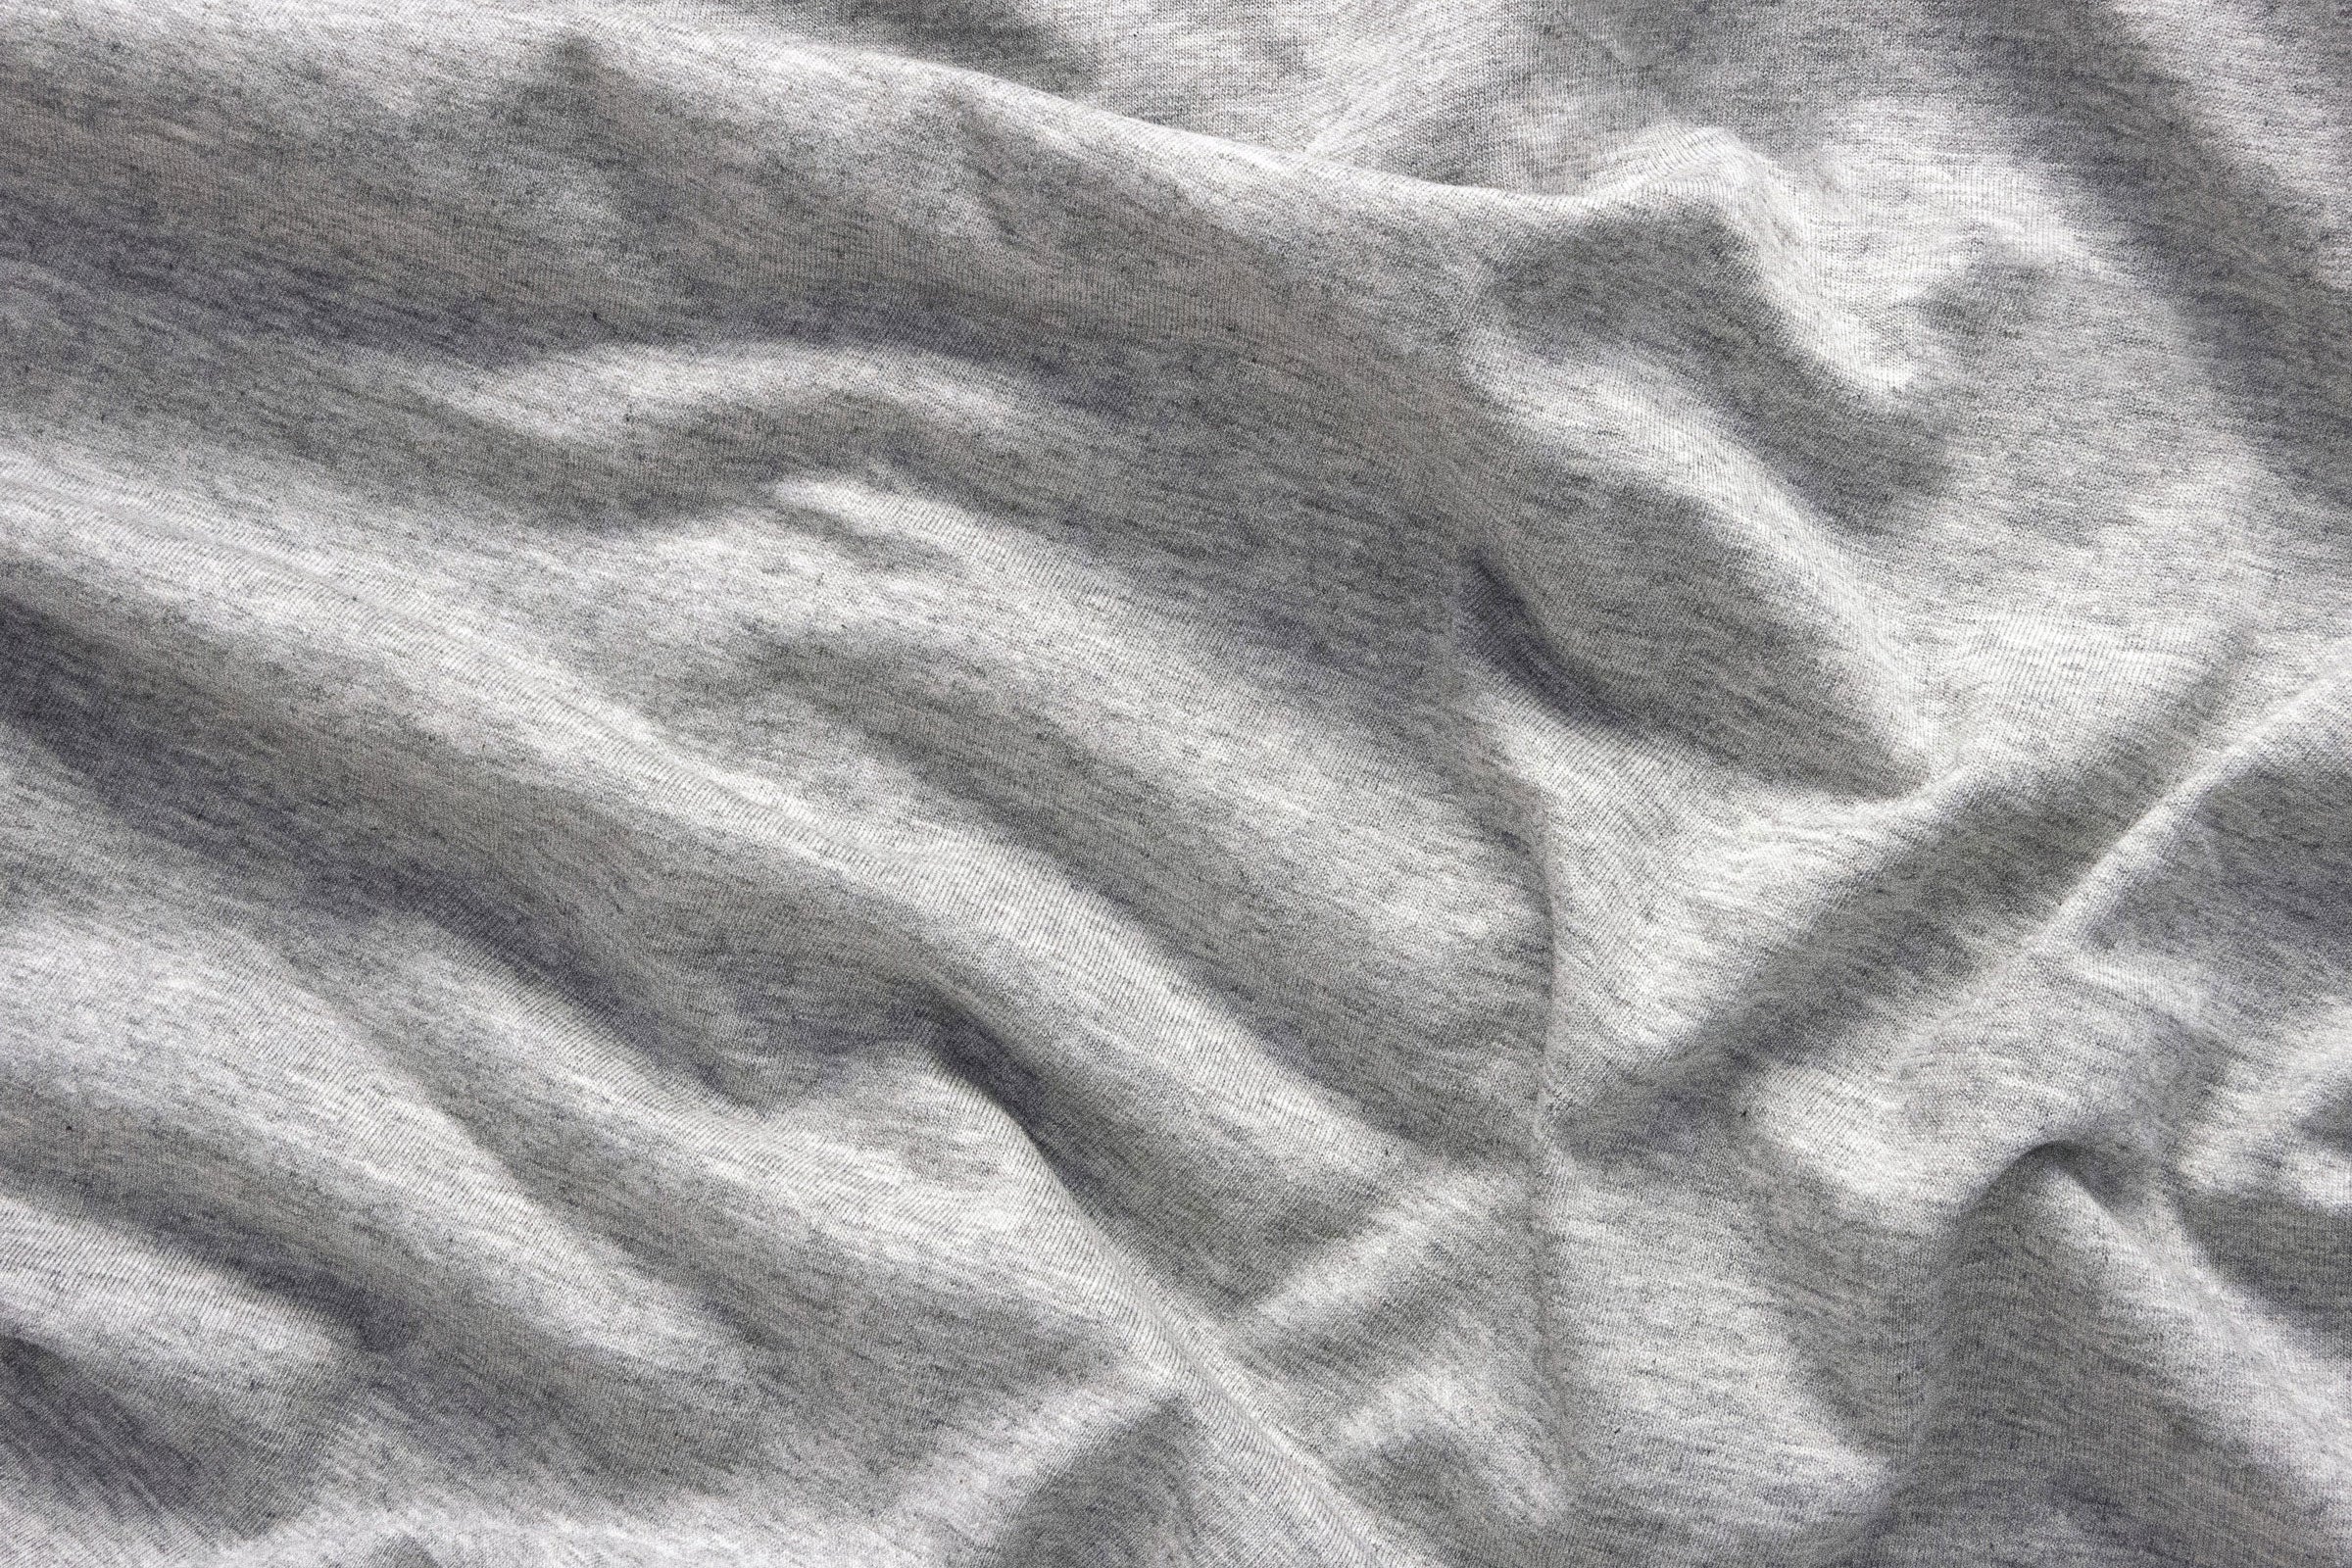 jersey-pebble-pillowcase-pair-close-up-shot-by-sojao.jpg